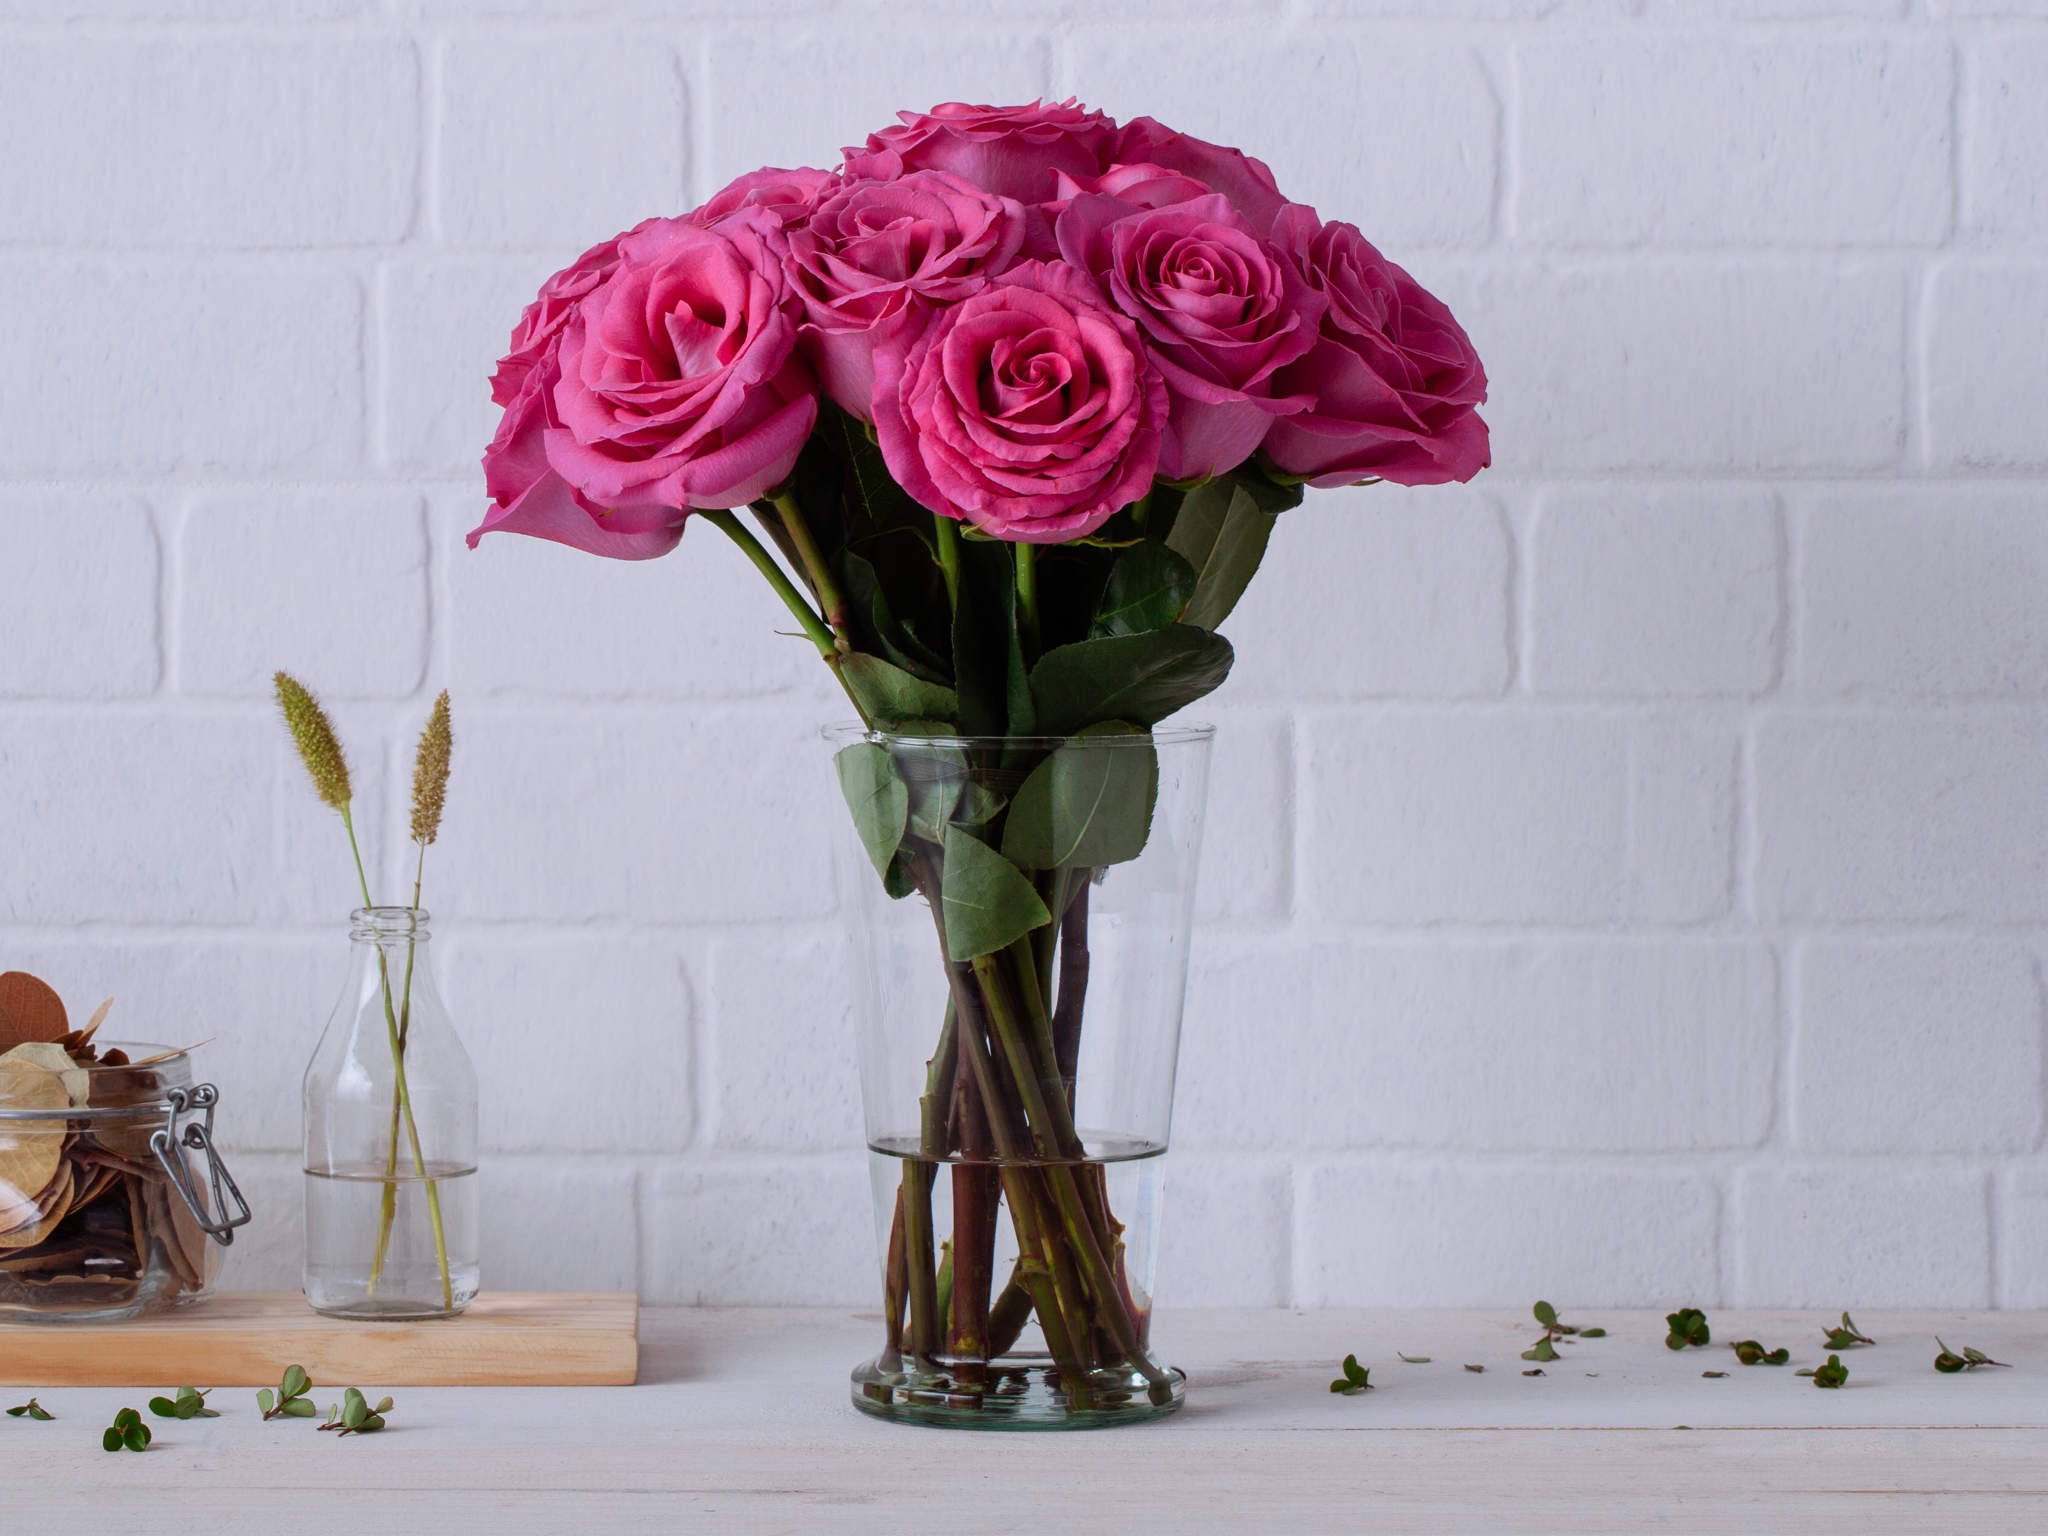 6 dicas para aumentar a durabilidade das flores: confira cuidados simples para manter a beleza por mais tempo